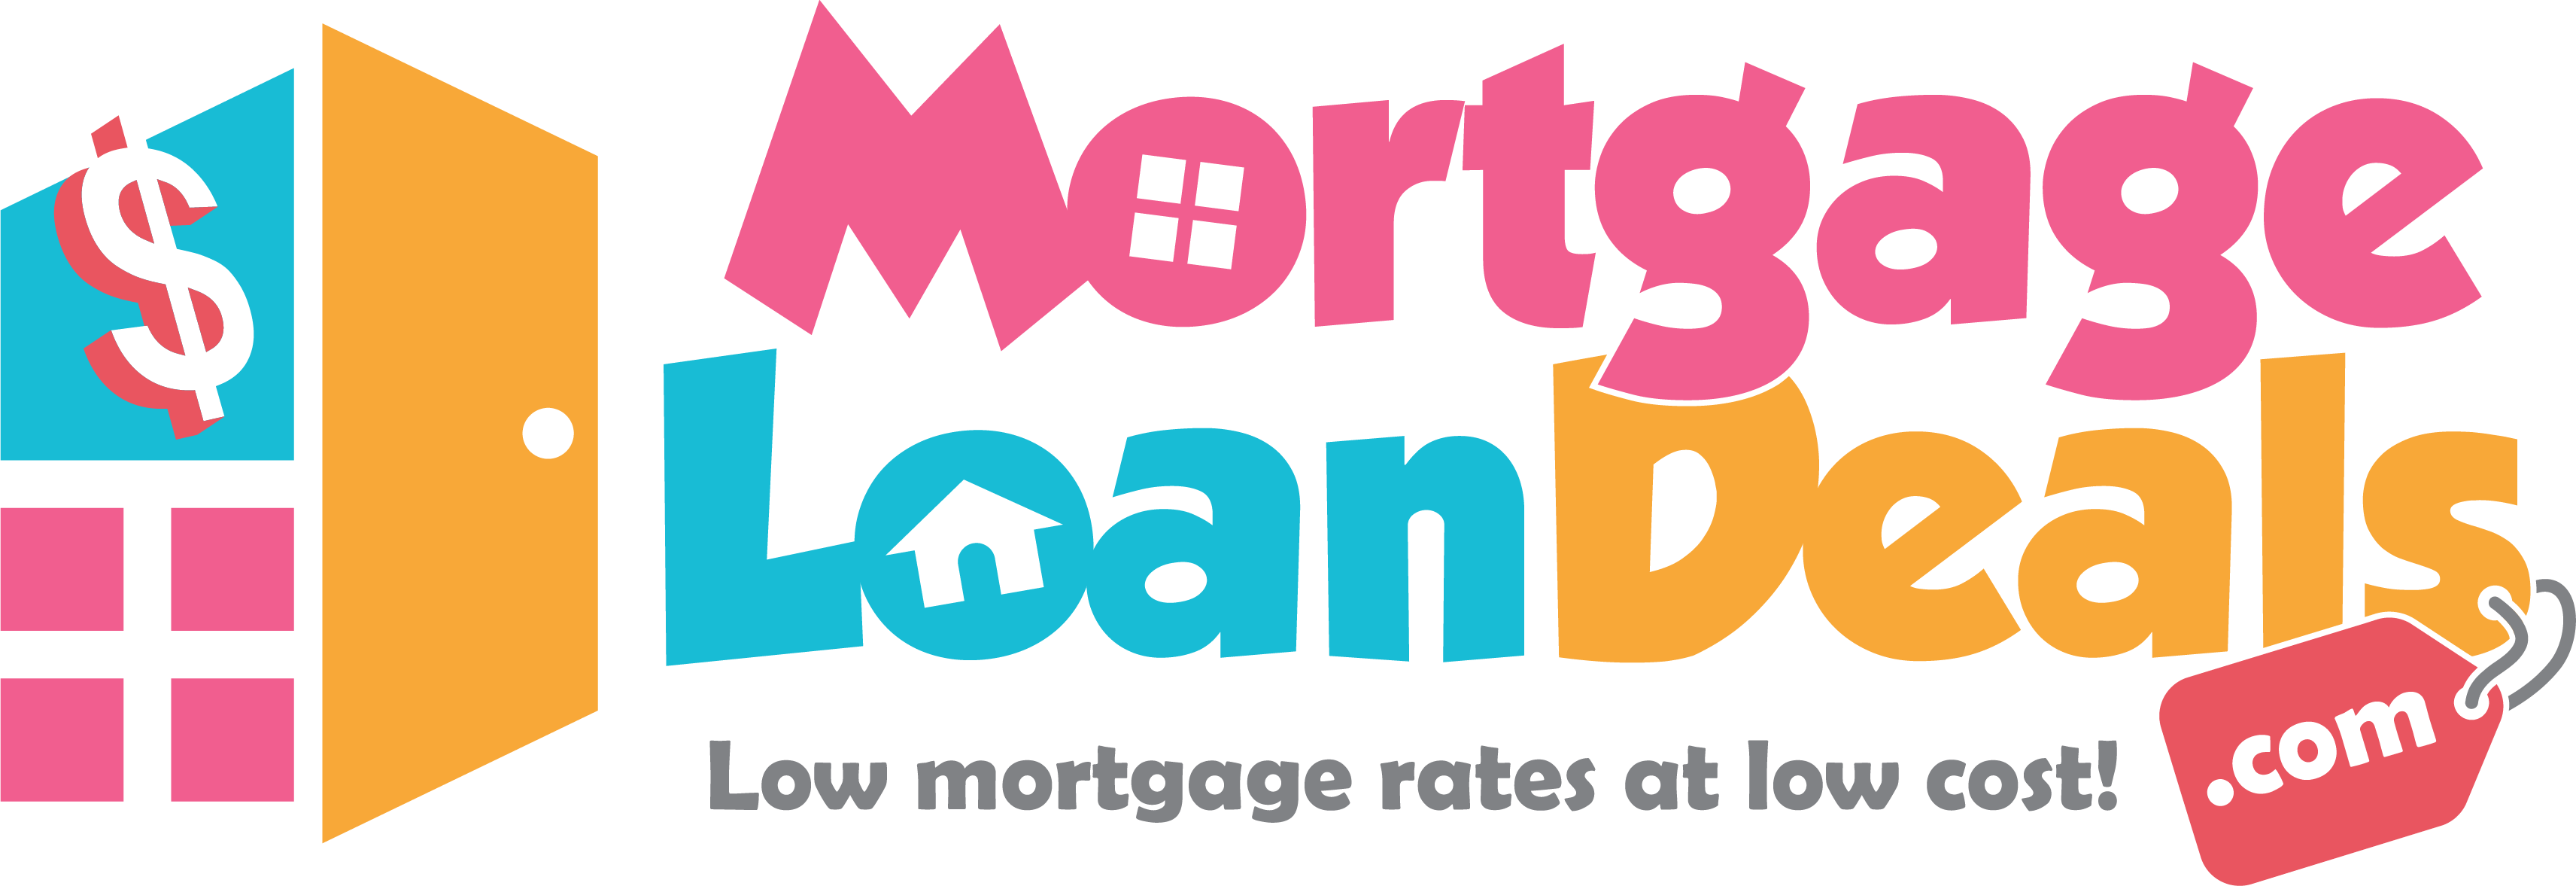 Mortgage Loan Deals